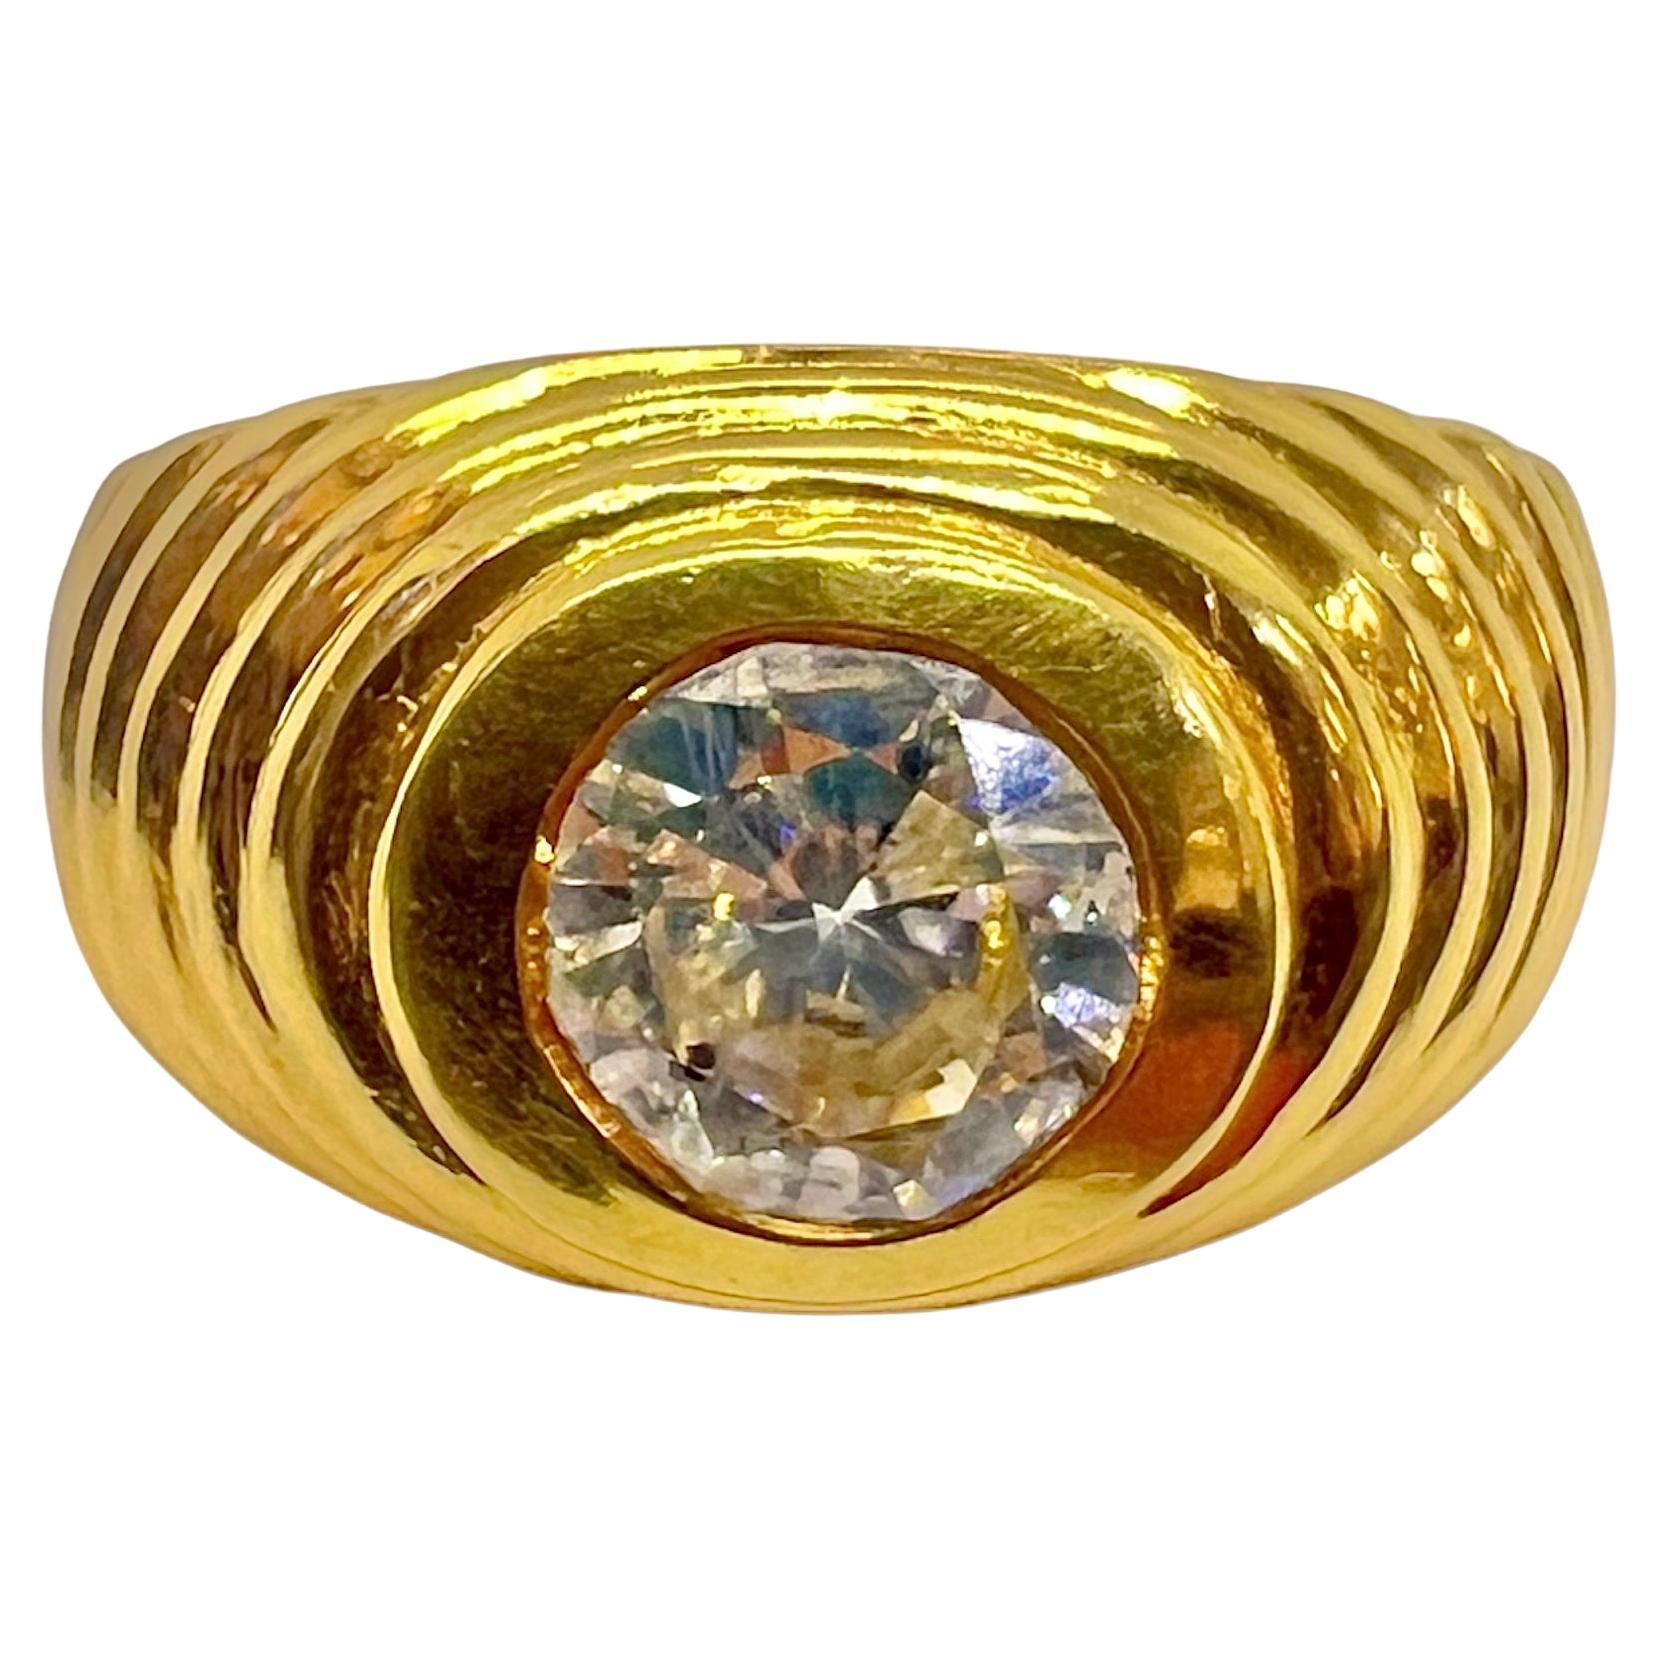 Sophia D. 1.03 Carat Diamond Ring in 18K Yellow Gold Setting